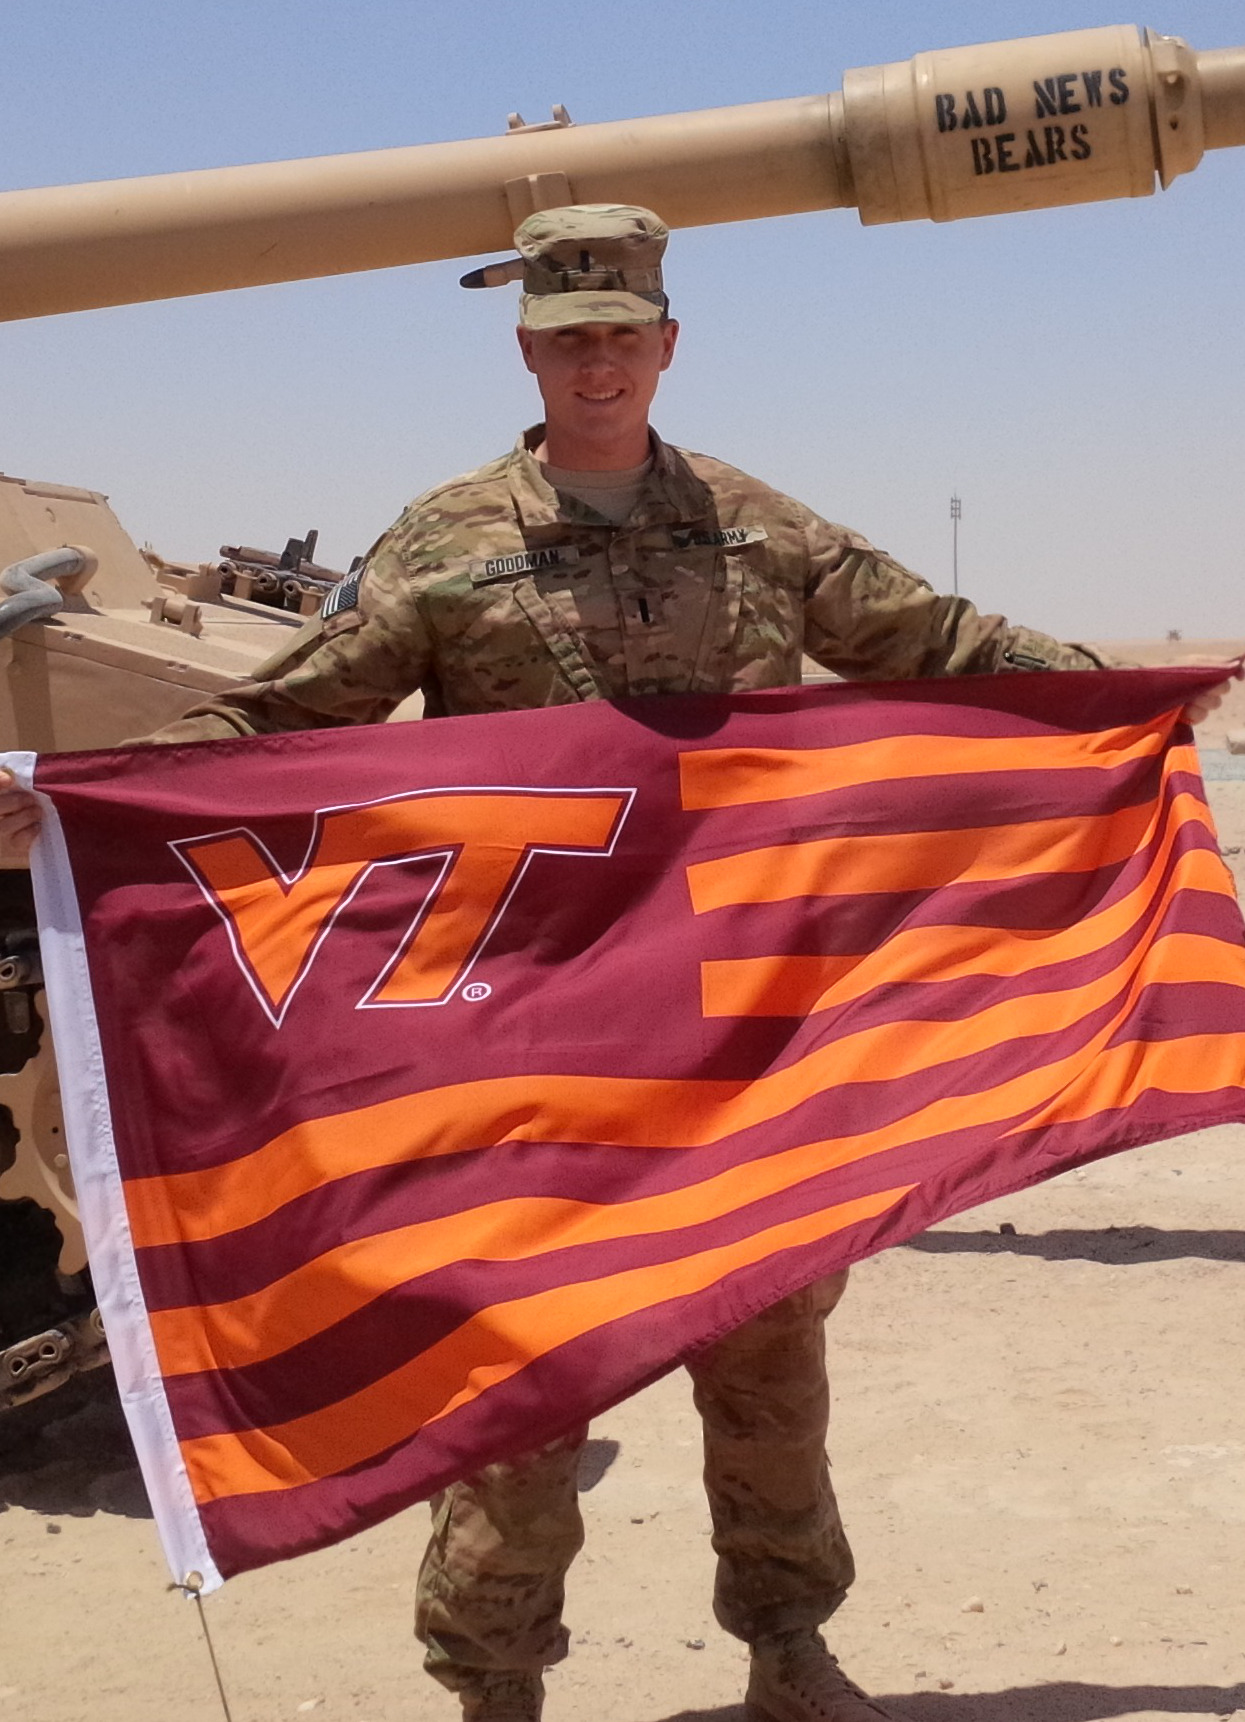 1st Lt. John Goodman, U.S. Army, Virginia Tech Corps of Cadets Class of 2013.